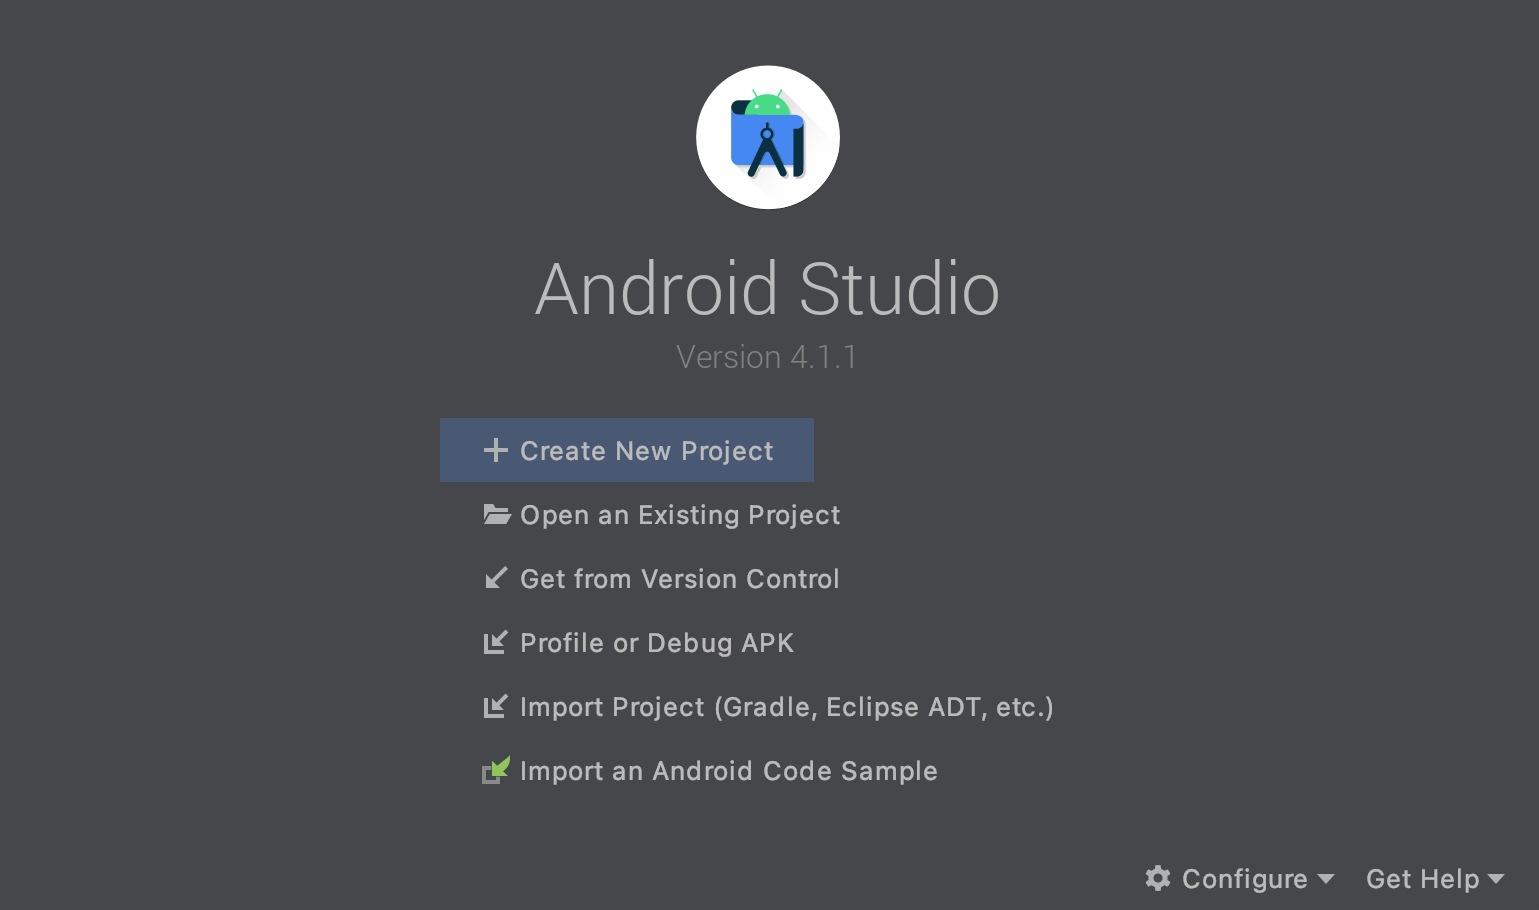 Android Studio's starting window